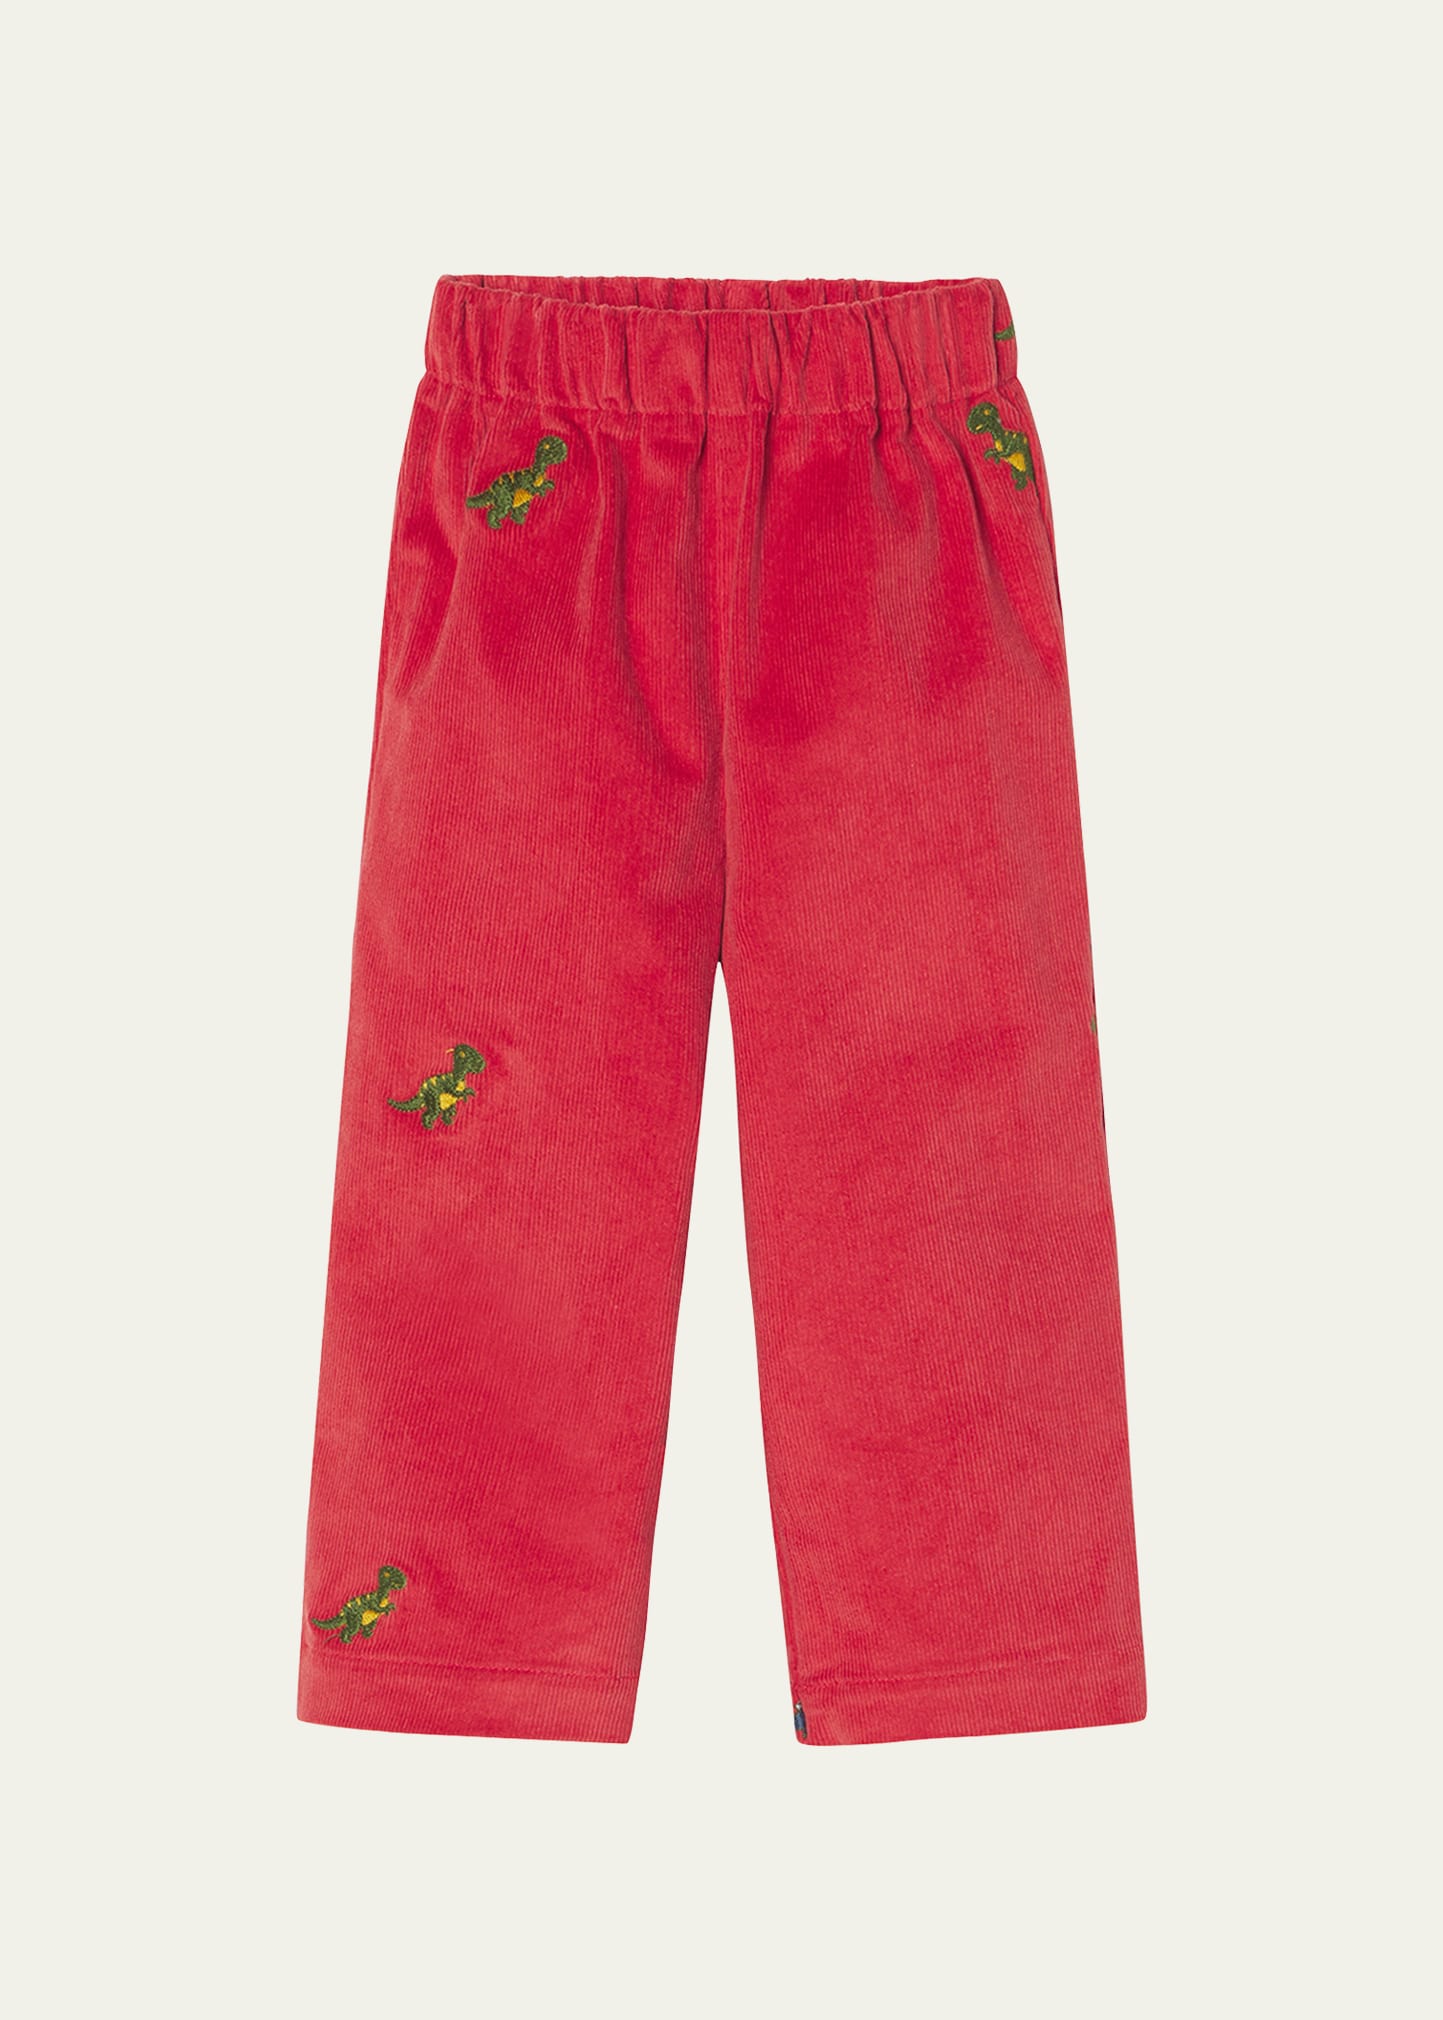 Classic Prep Childrenswear Boy's Myles Embroidered Dinosaur Corduroy Pants, Size 18M-4